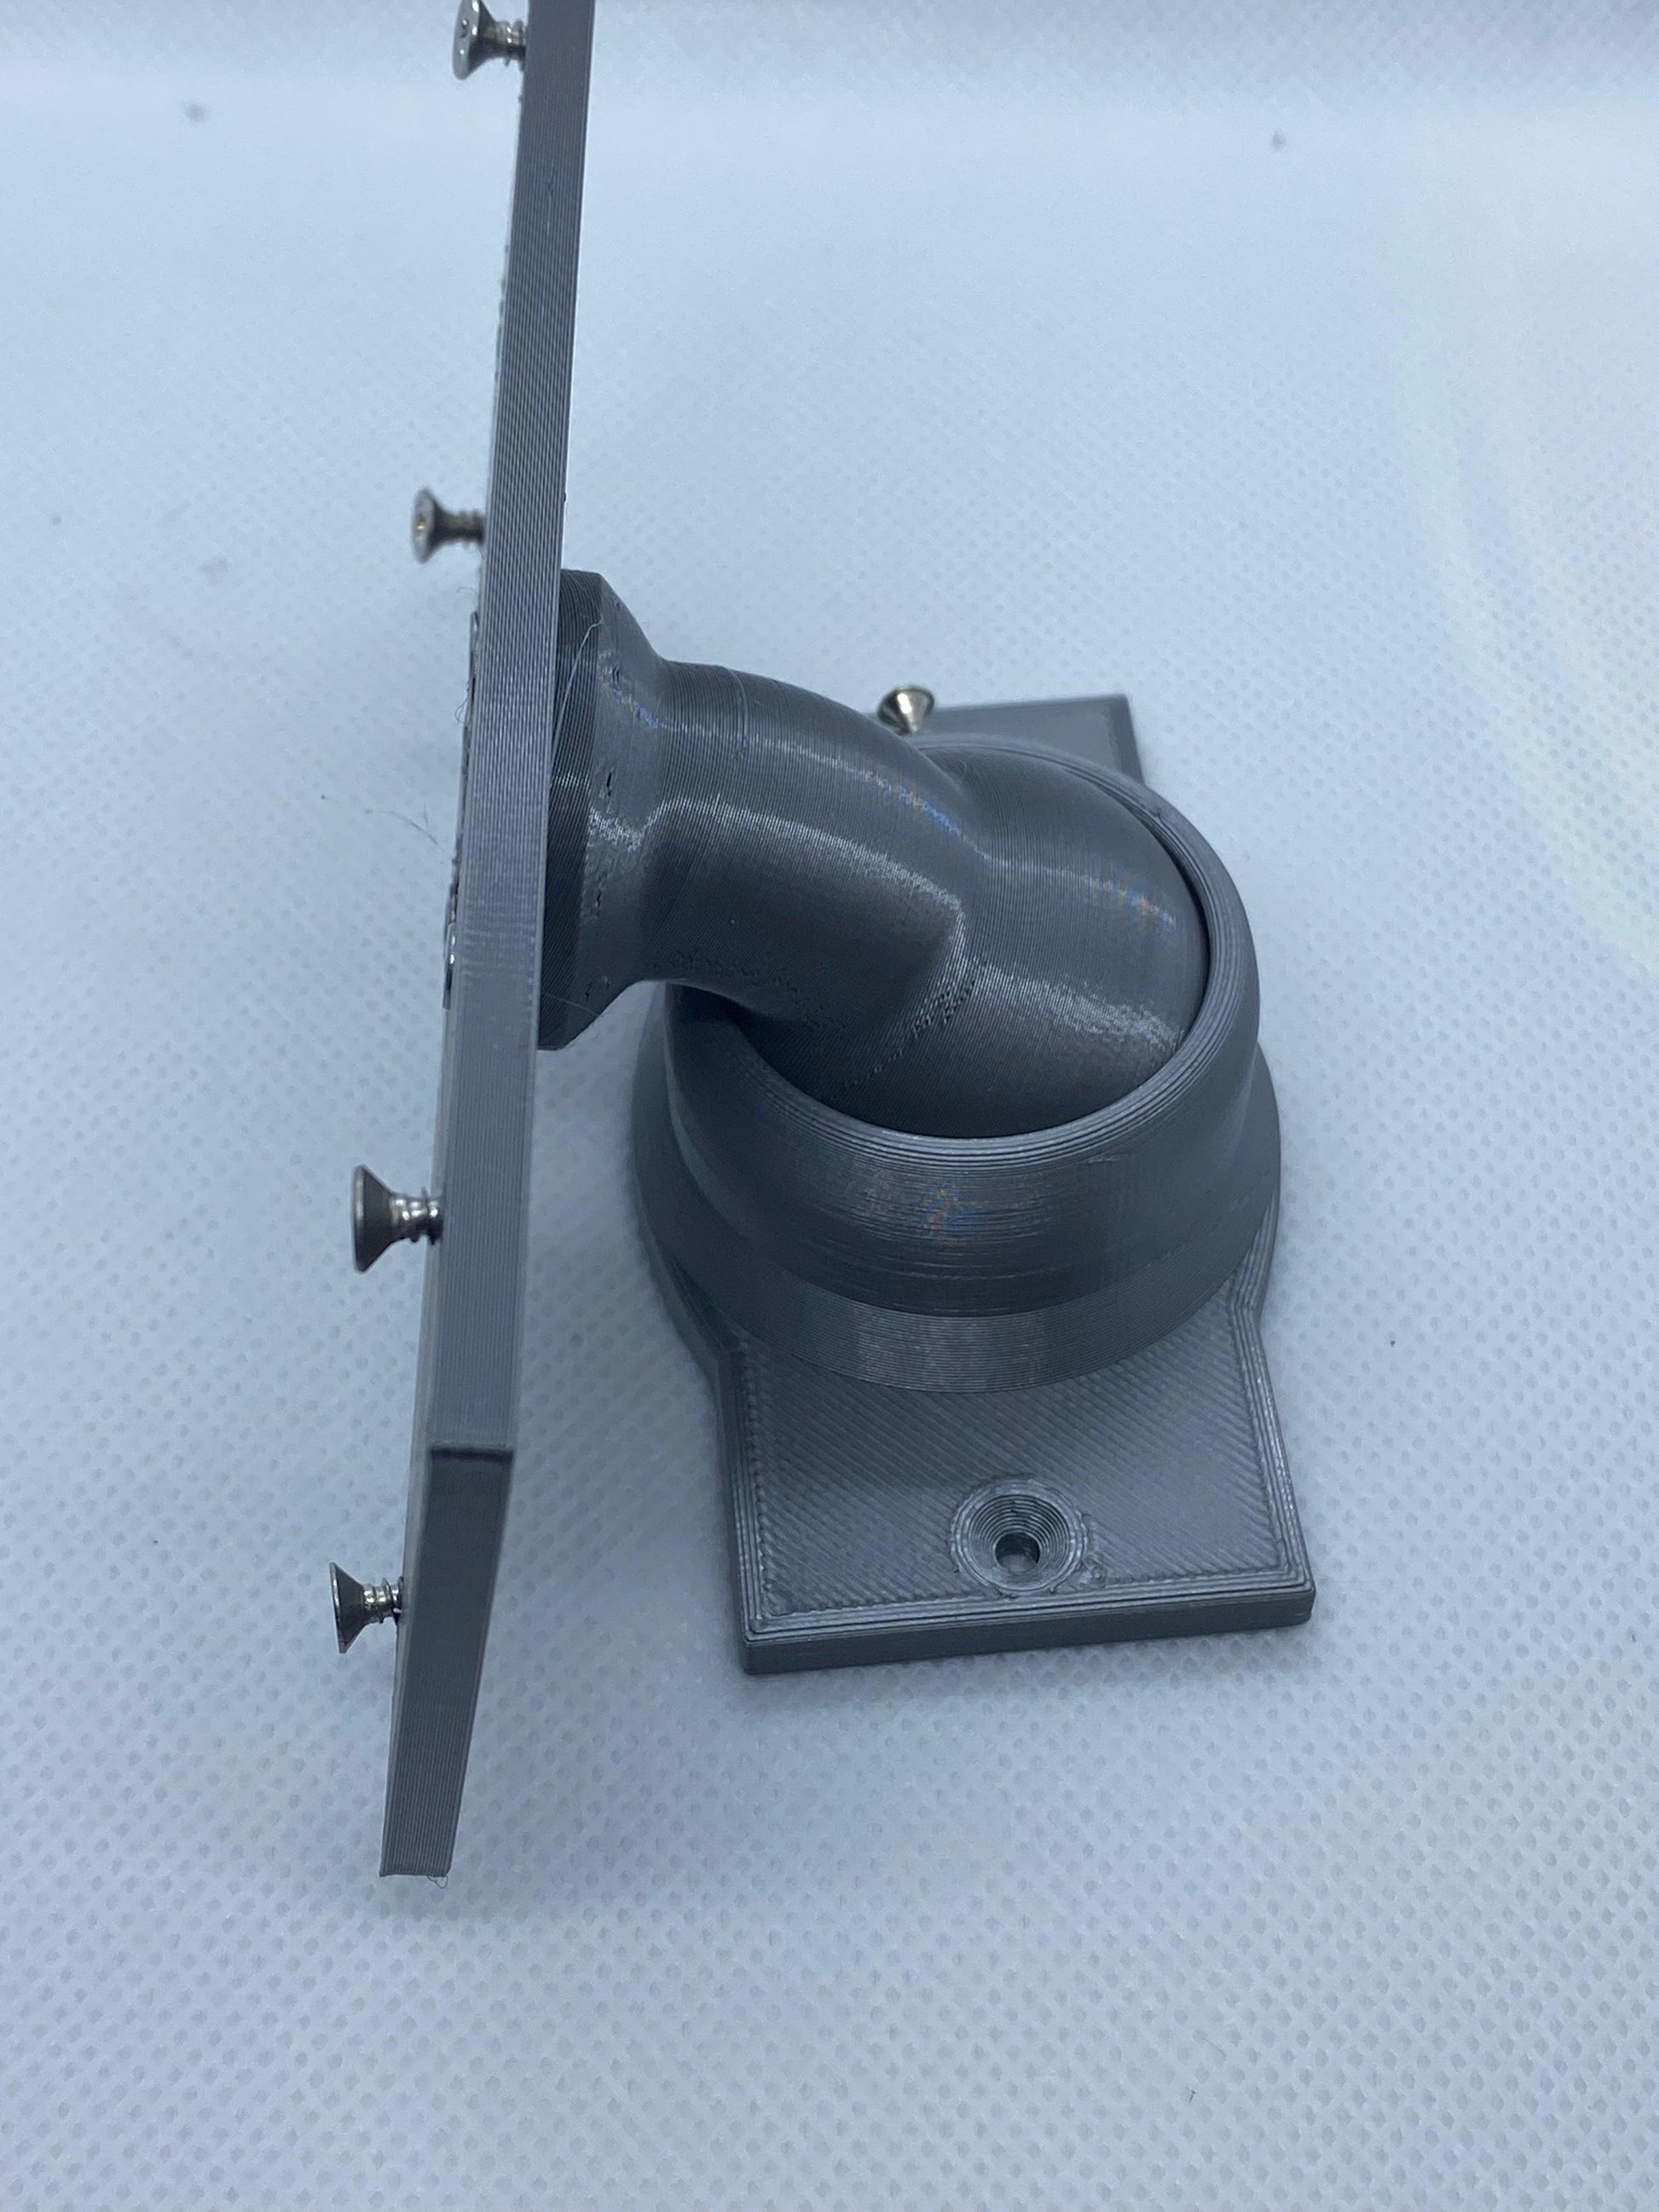 Swivel 90° Mount for Ring Generation 2 Doorbell - Adjustable Swivel Version for Perpendicular or Side wall Doorbell Installations - DoorbellMount.Com